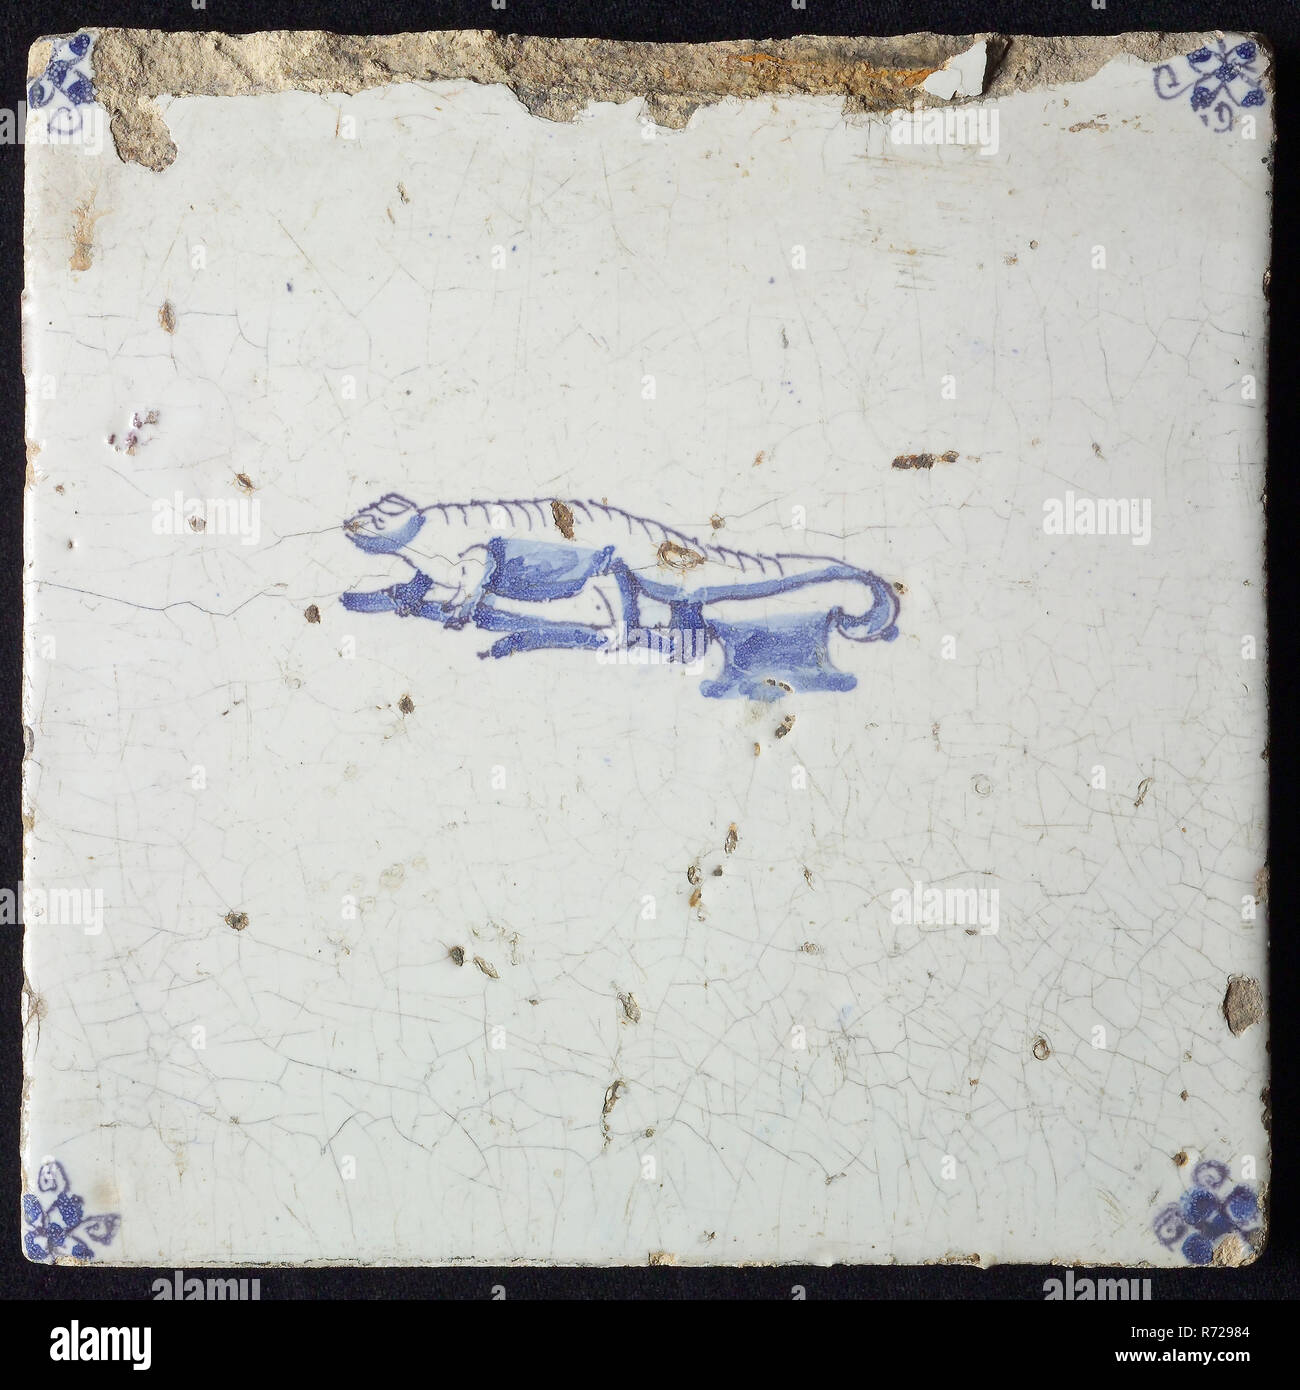 Animal tile, crocodile left, in blue on white, corner motif spider, wall tile tile sculpture ceramic earthenware glaze, baked 2x glazed painted Stock Photo